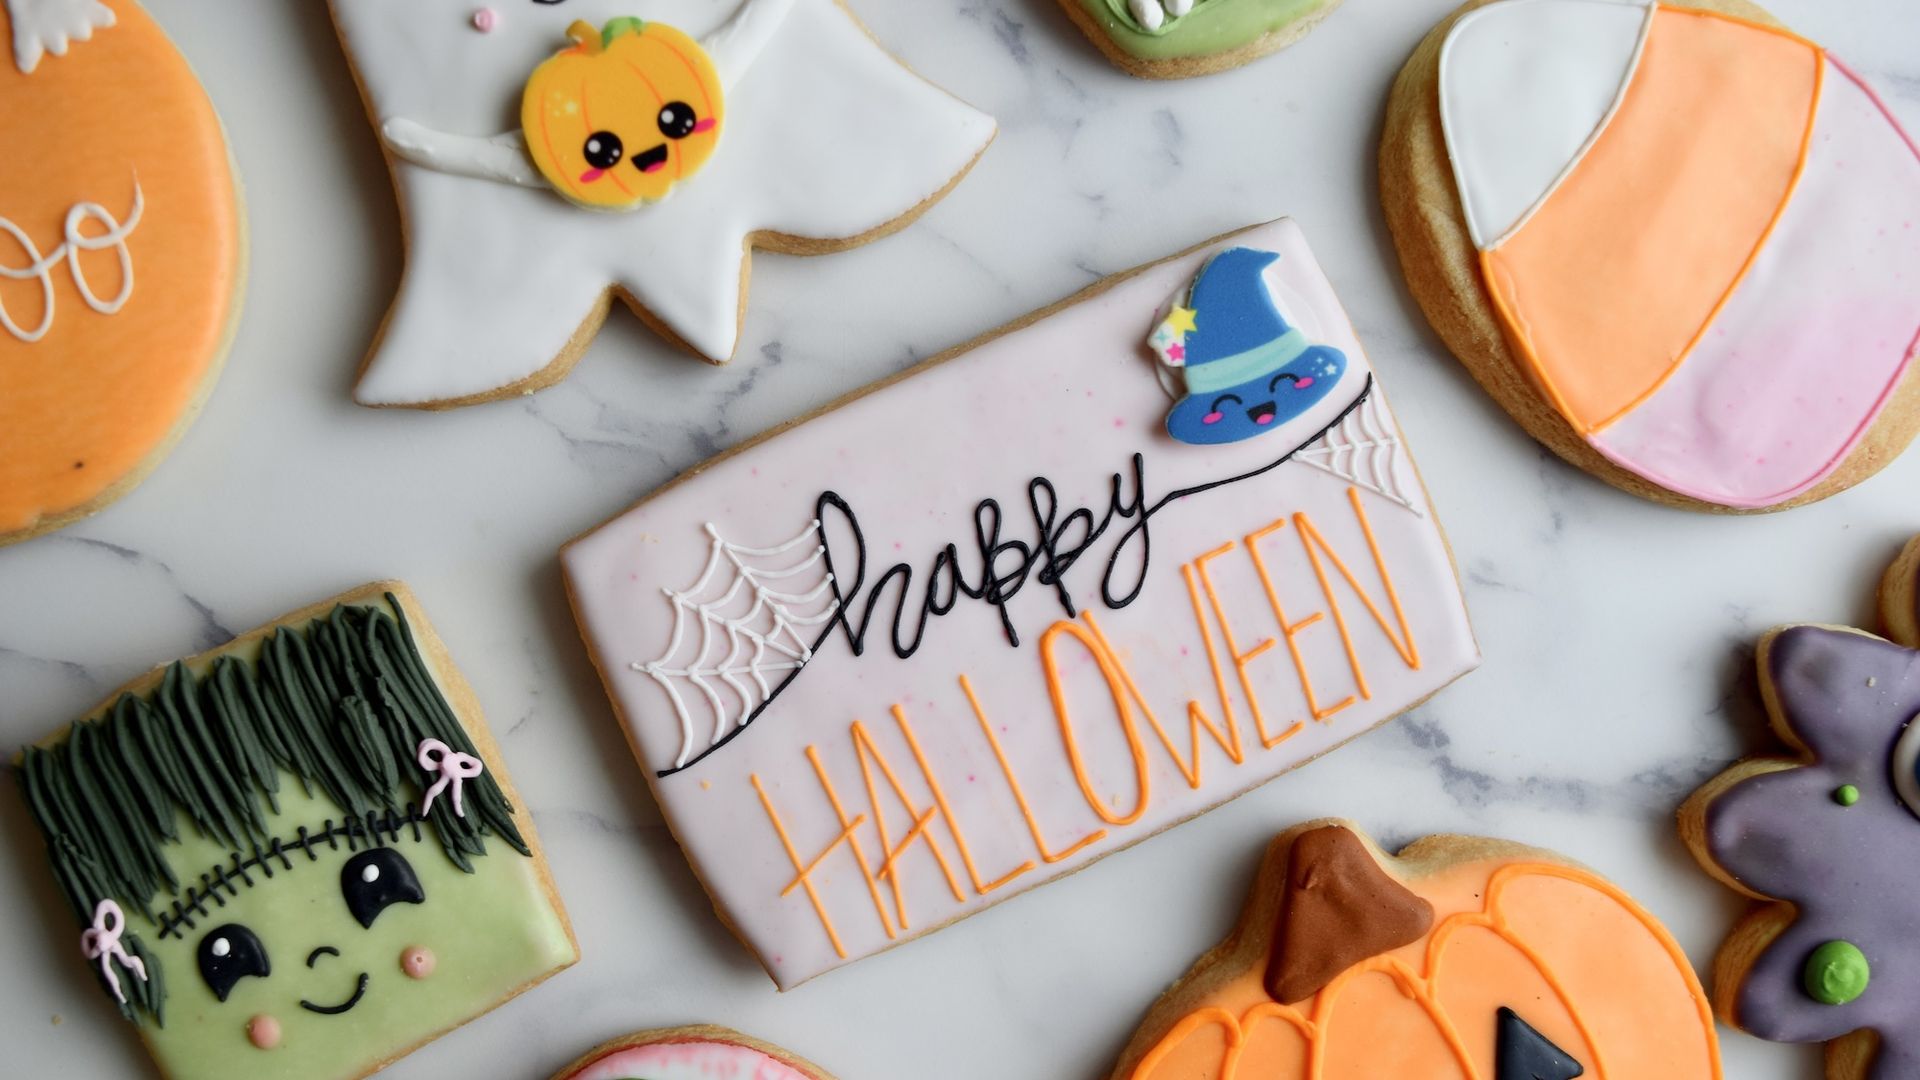 Halloween-themed shaped cookies